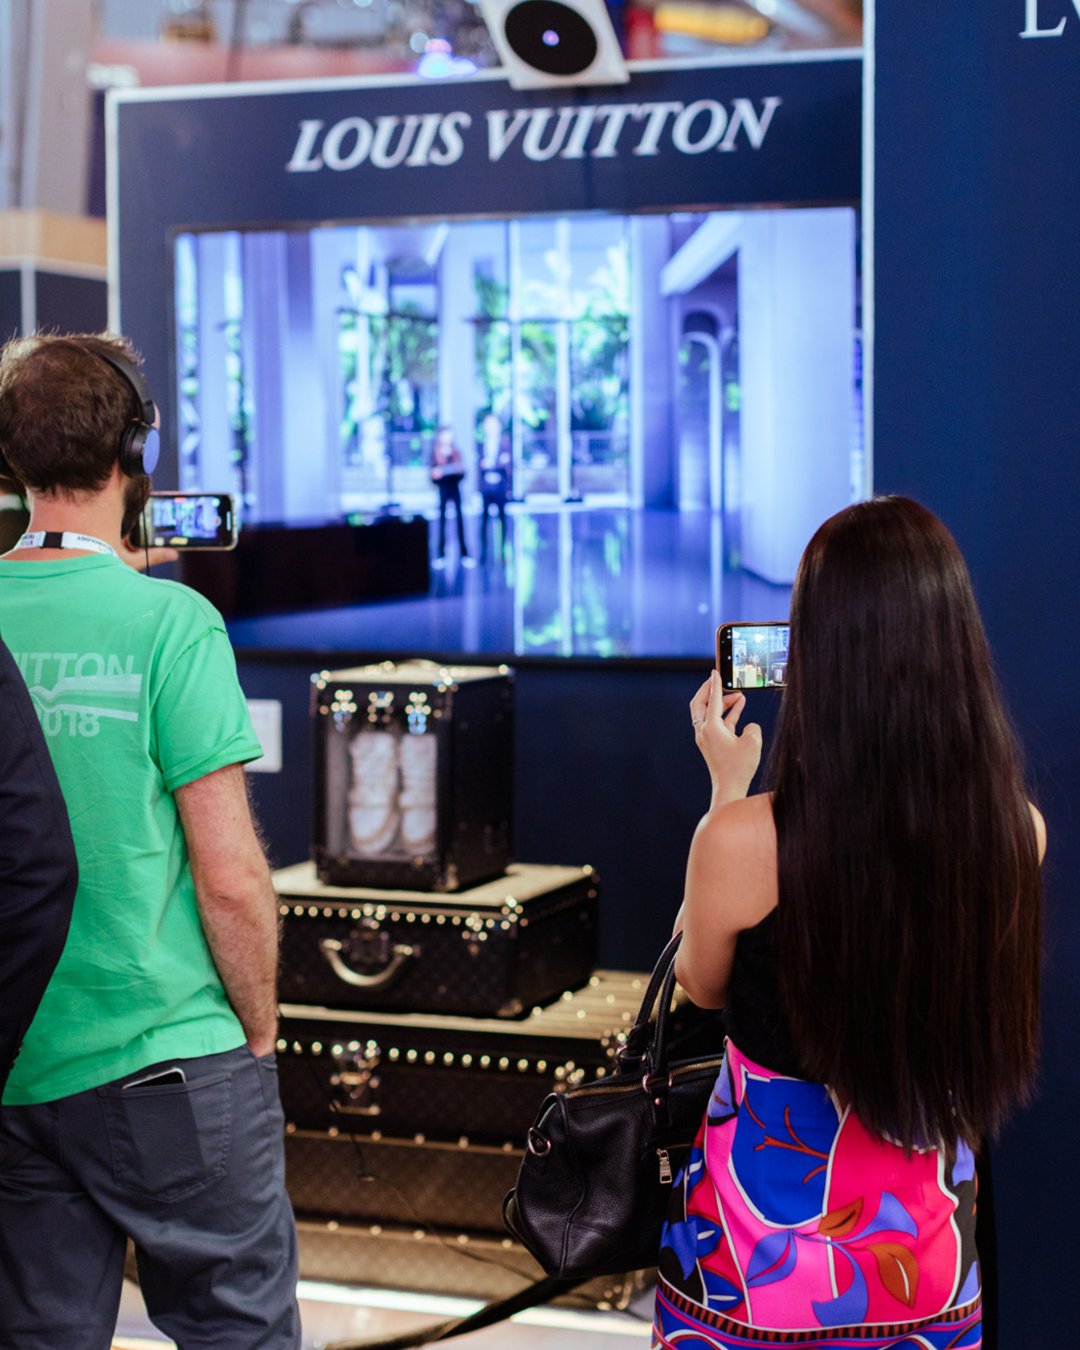 Louis Vuitton on X: In Dubai until March 17th: #LouisVuitton is